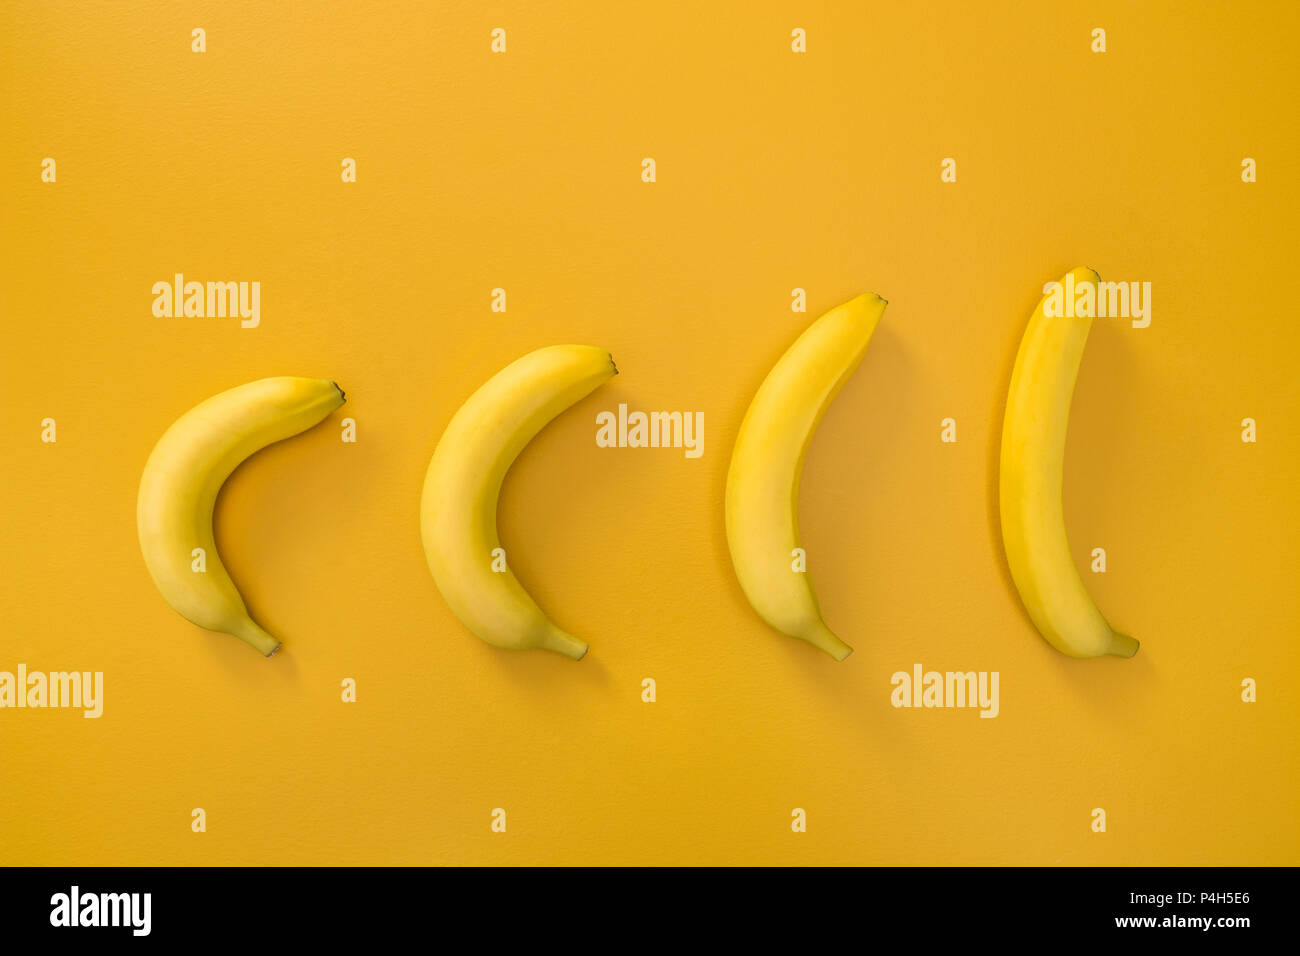 Bananas illustrating evolution theory, on vivid yellow background Stock  Photo - Alamy